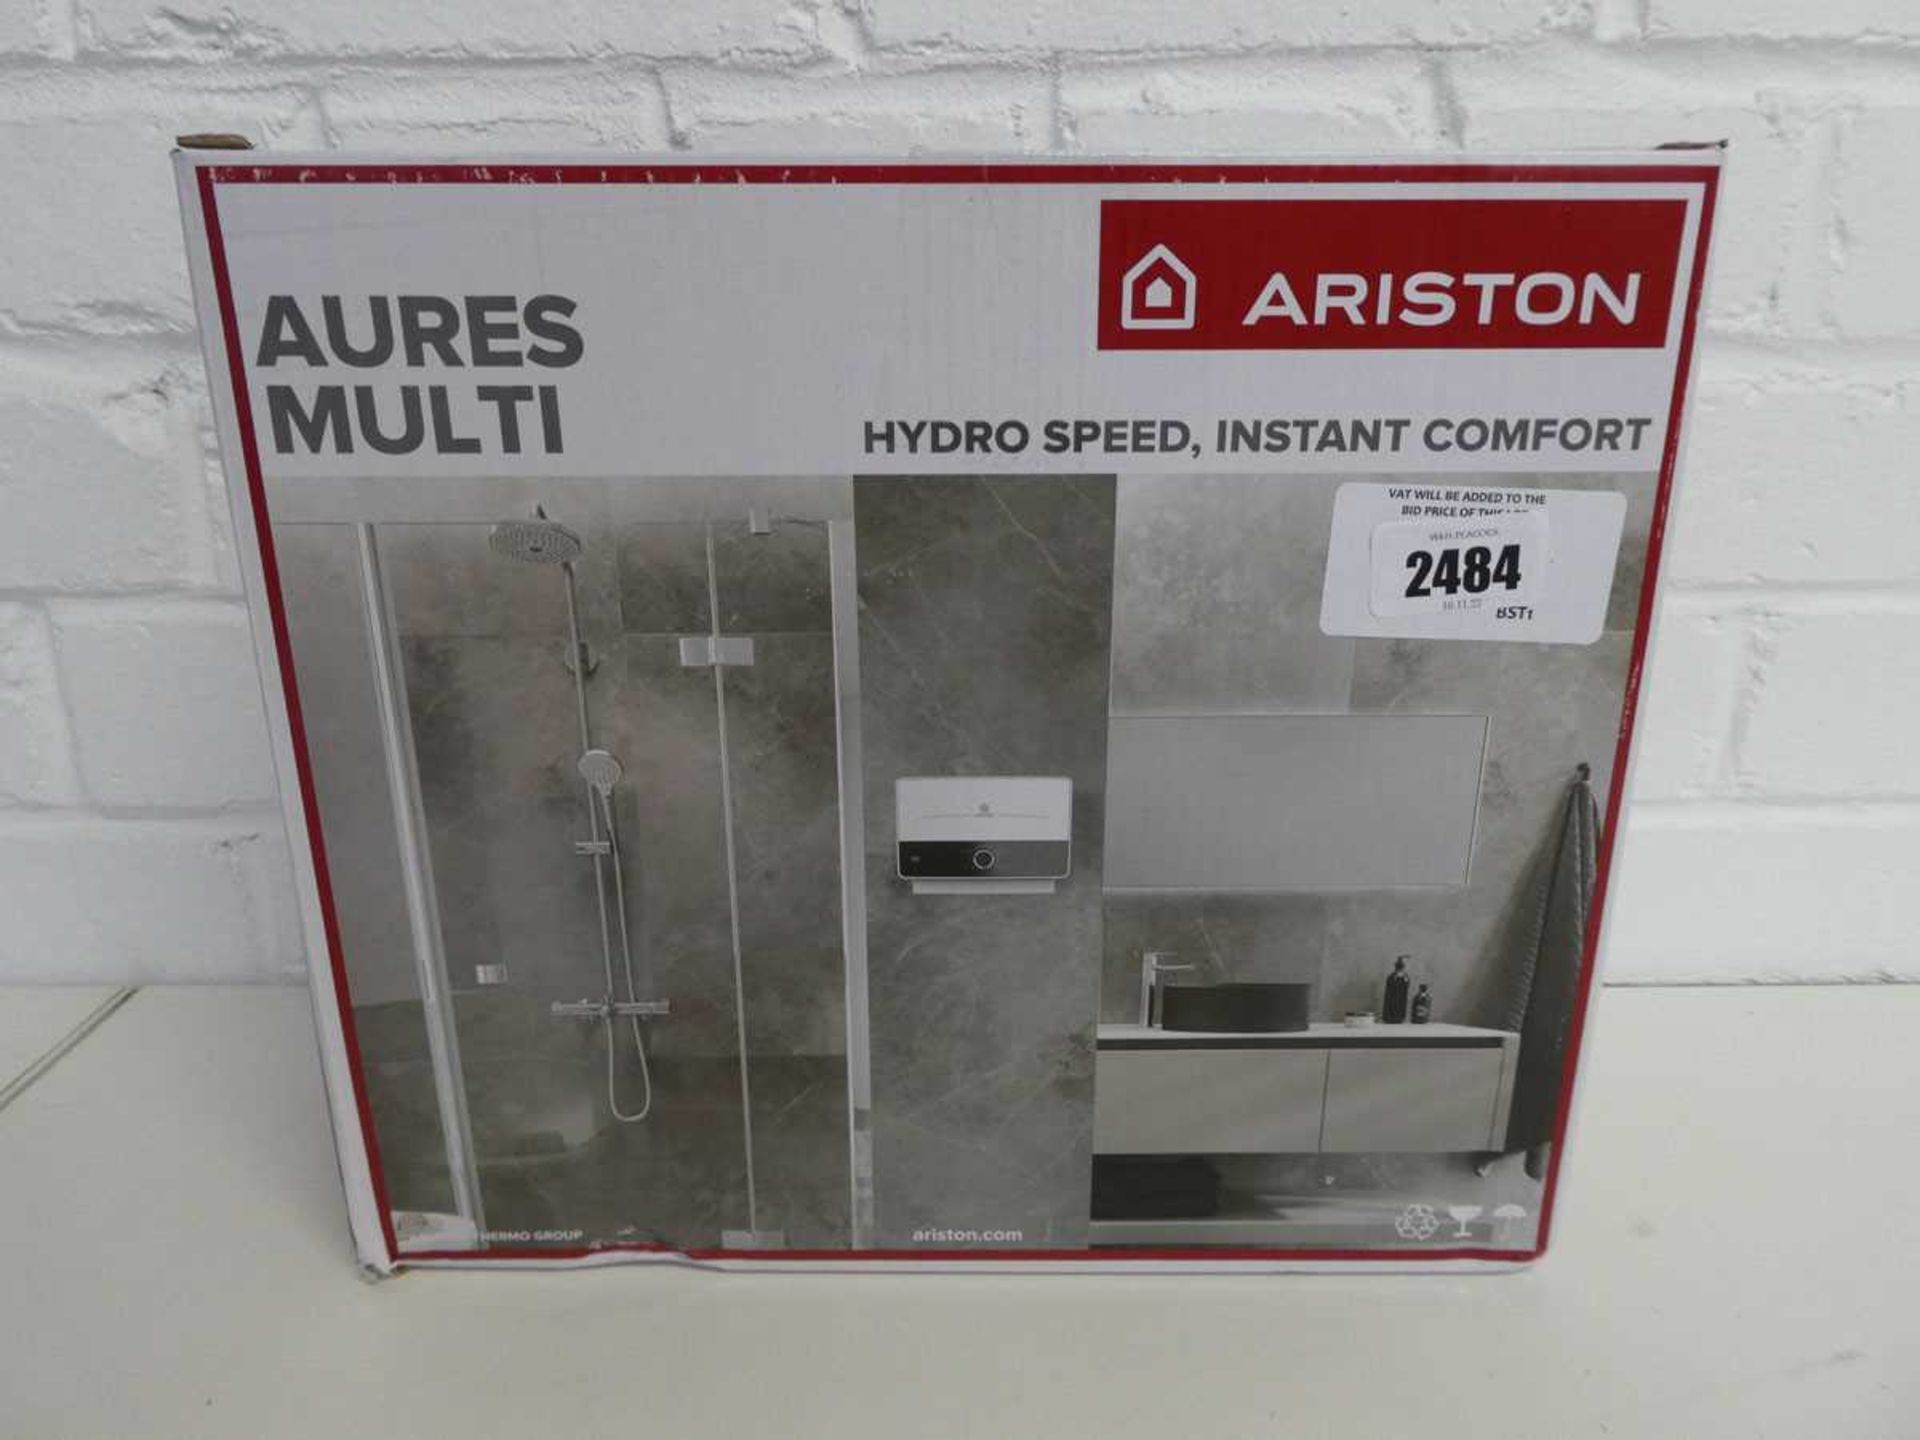 +VAT Ariston Aures Multi Hydro Speed electric instant water heater